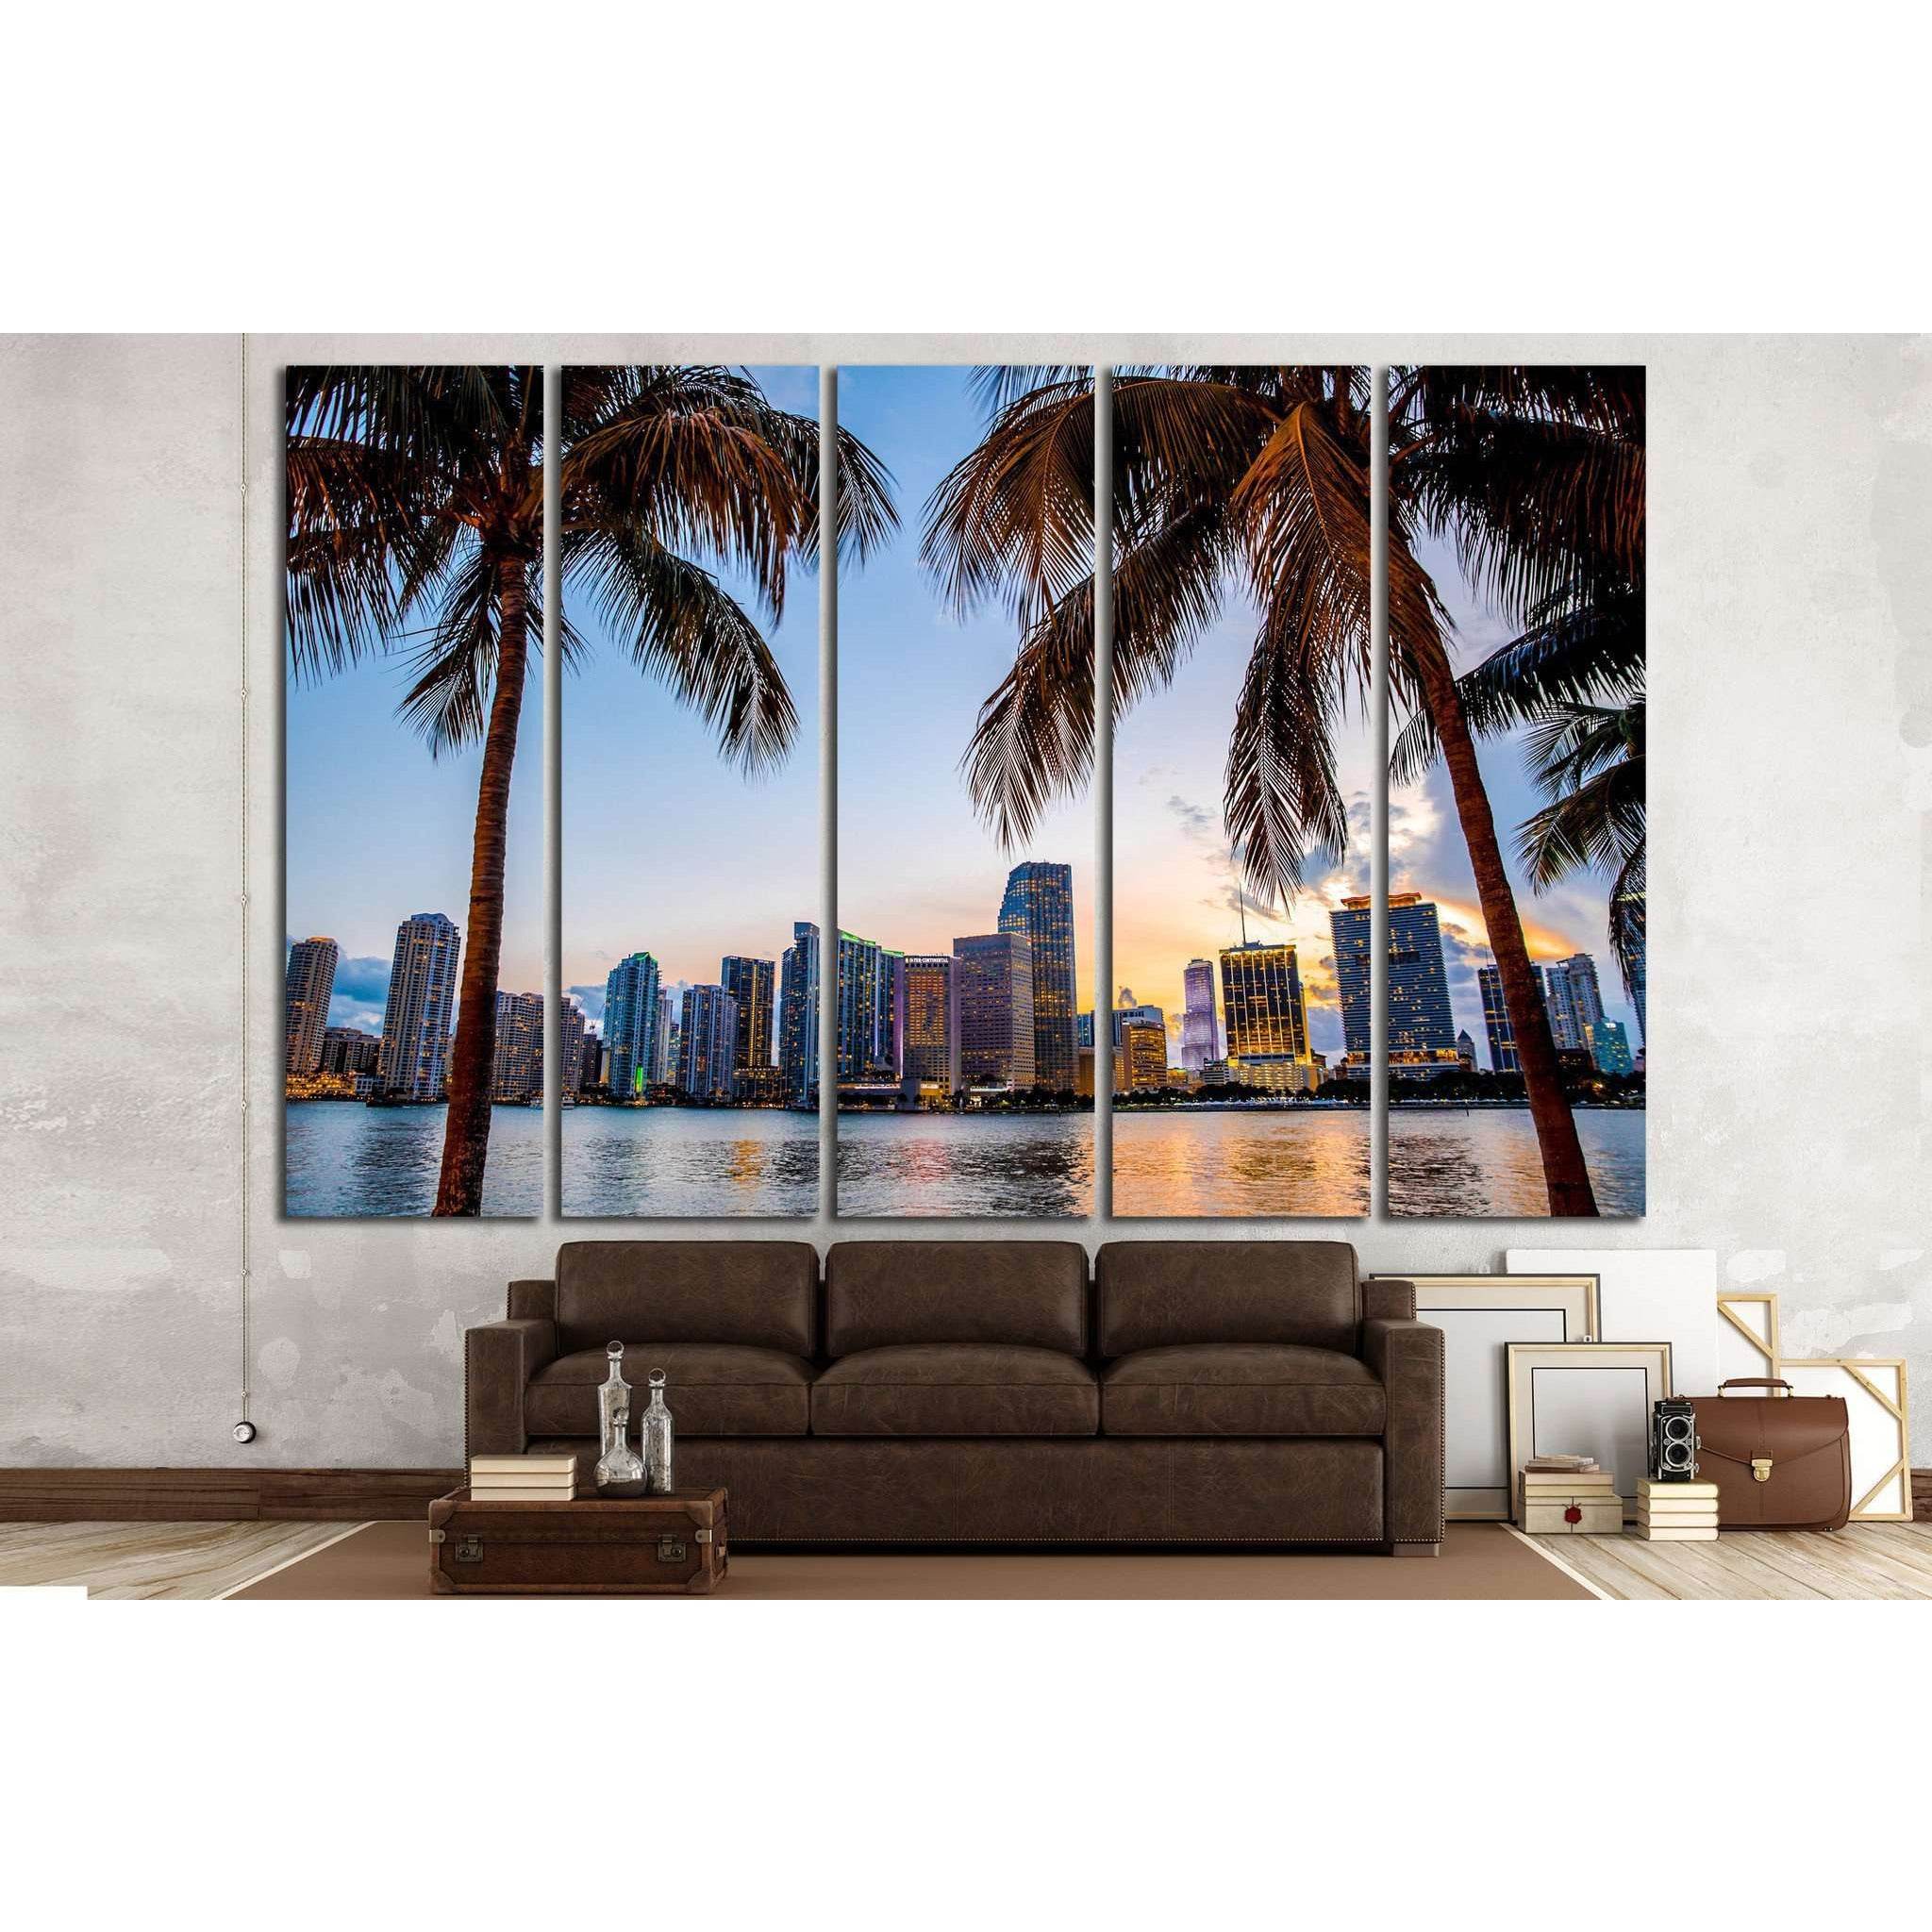 Miami, Florida skyline №1228 Ready to Hang Canvas Print